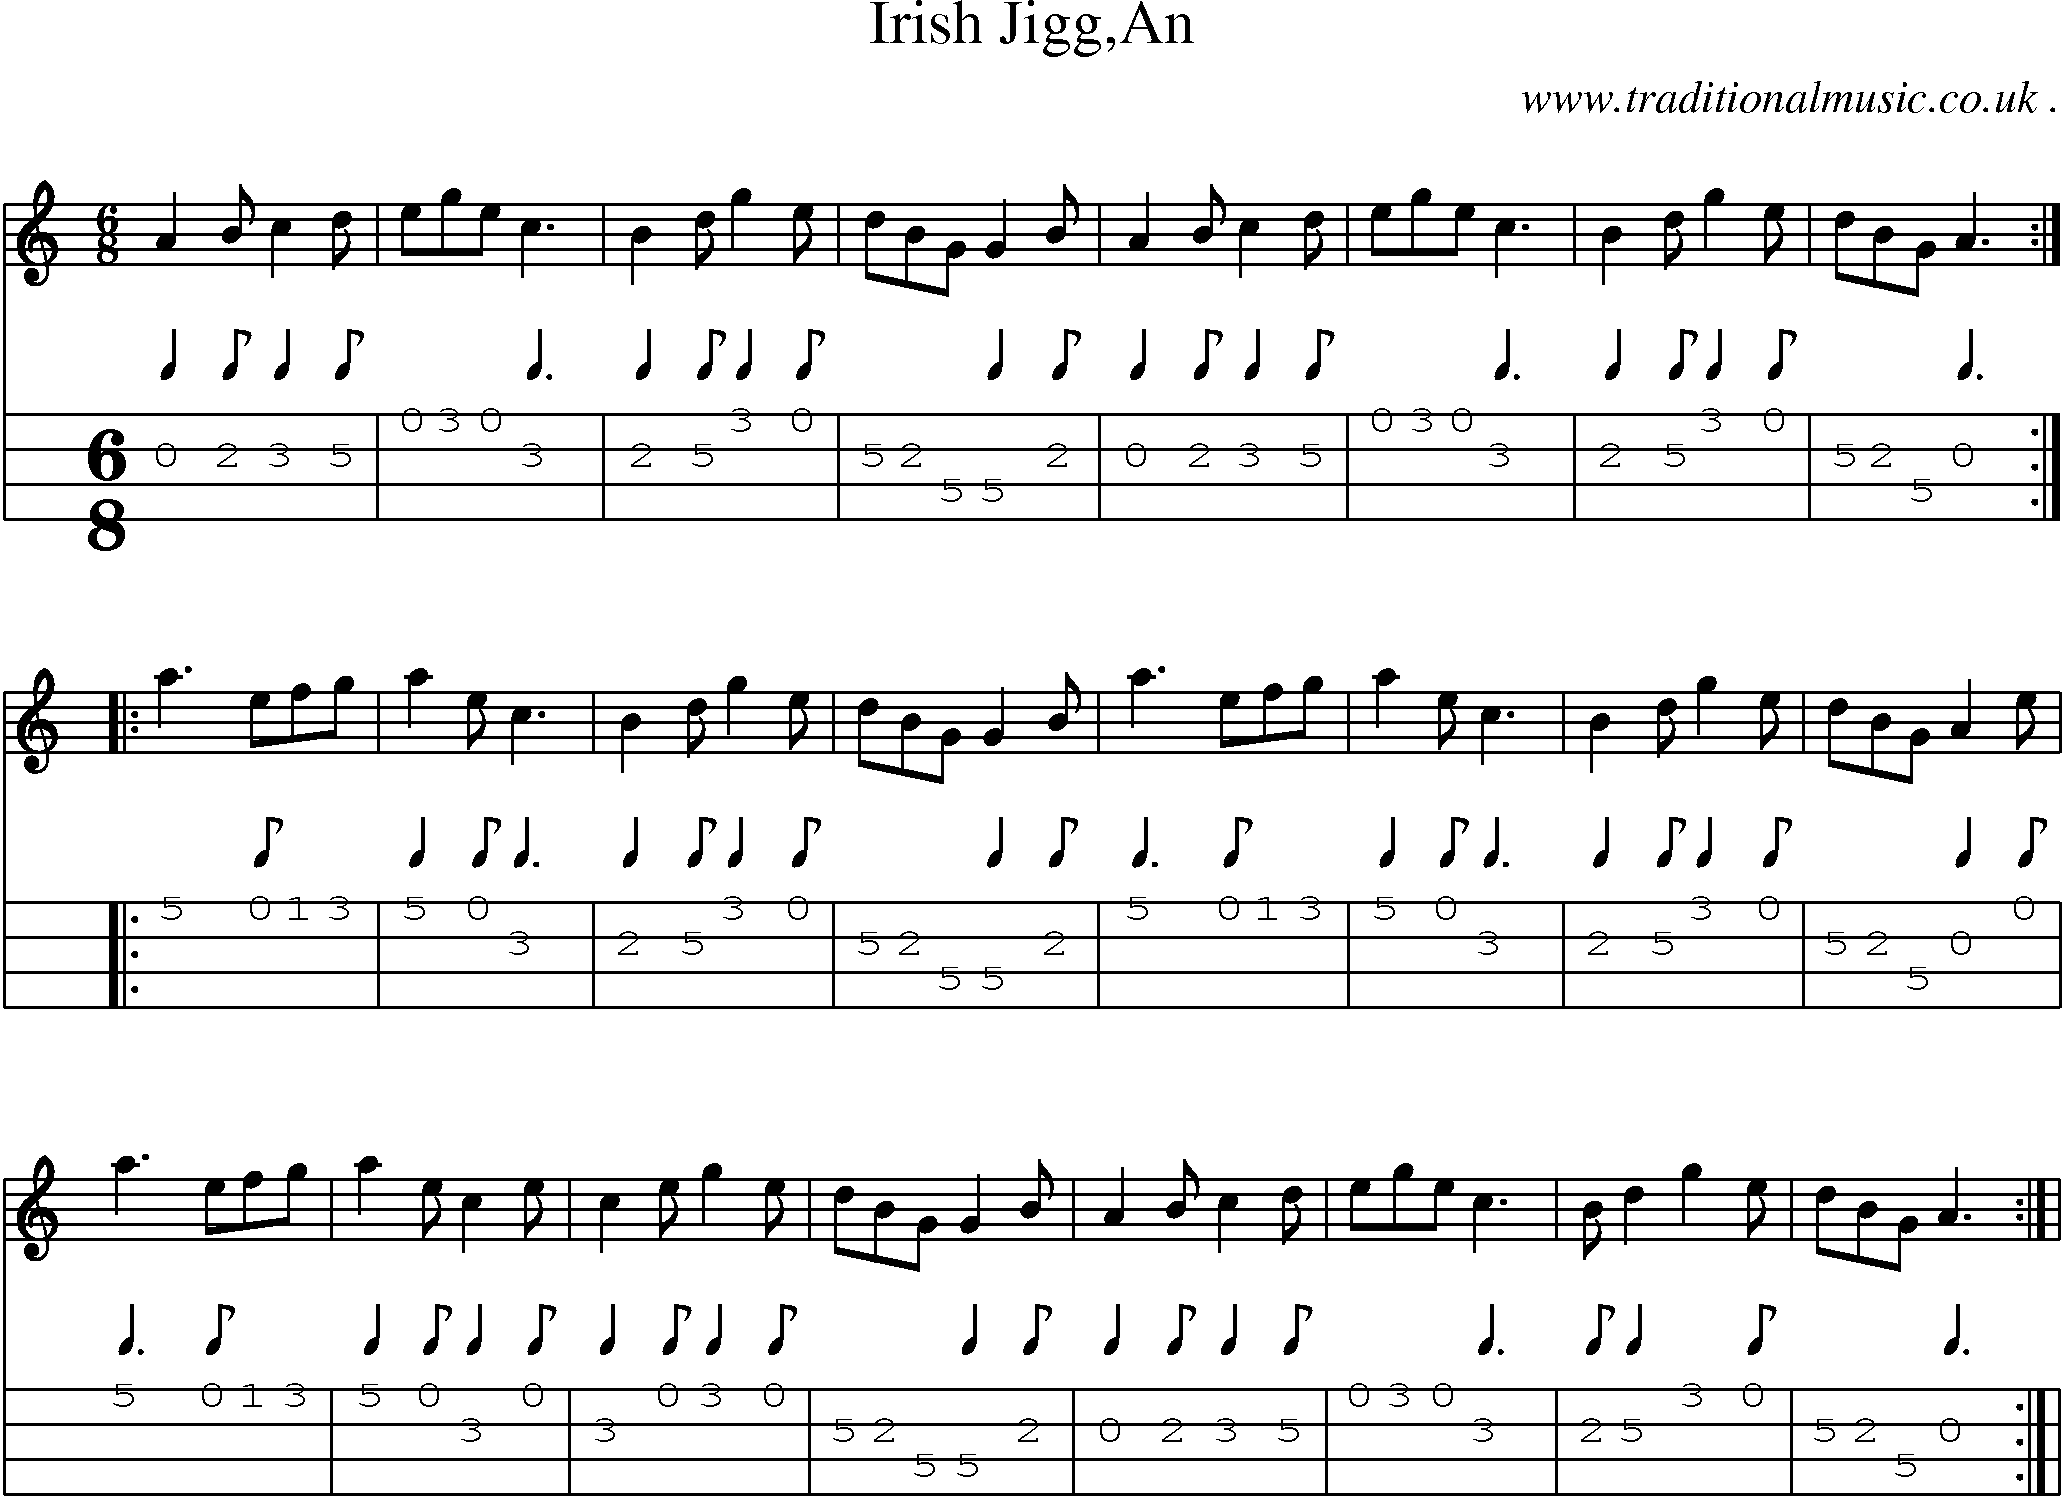 Sheet-Music and Mandolin Tabs for Irish Jiggan